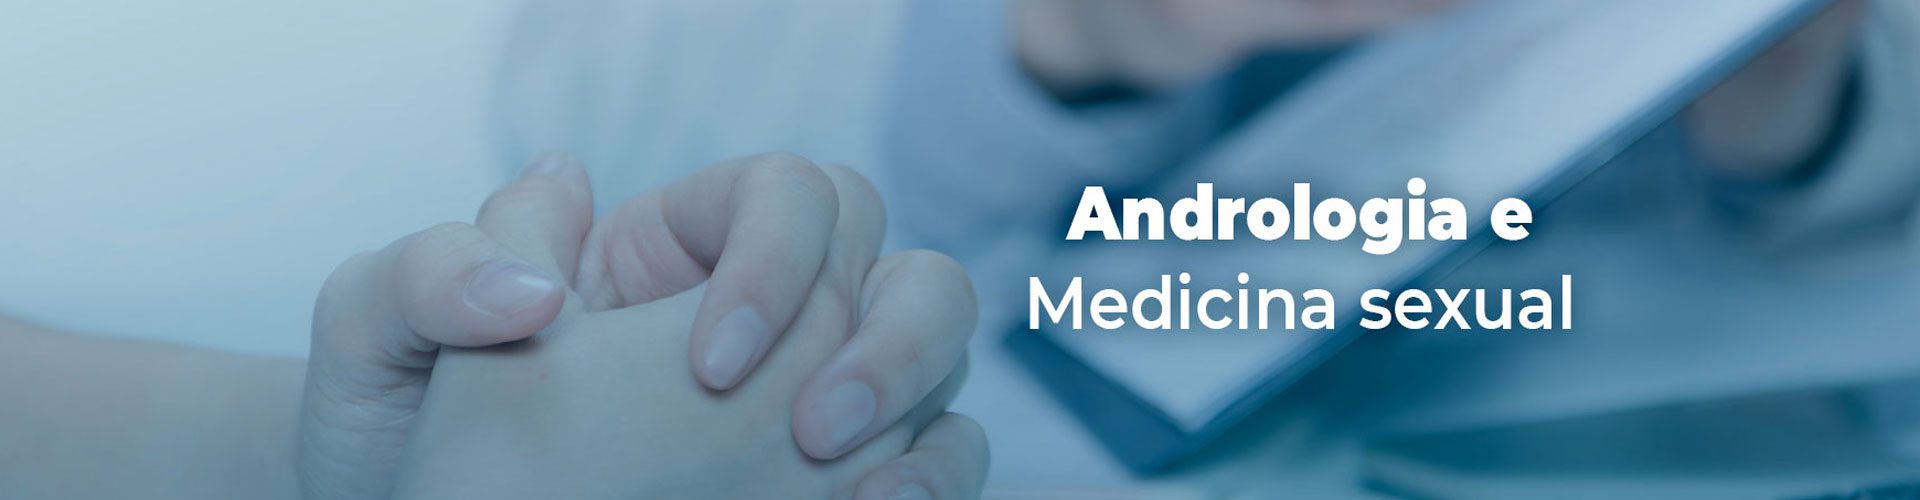 Andrologia e Medicina Sexual | Dr. Rodrigo Freddi